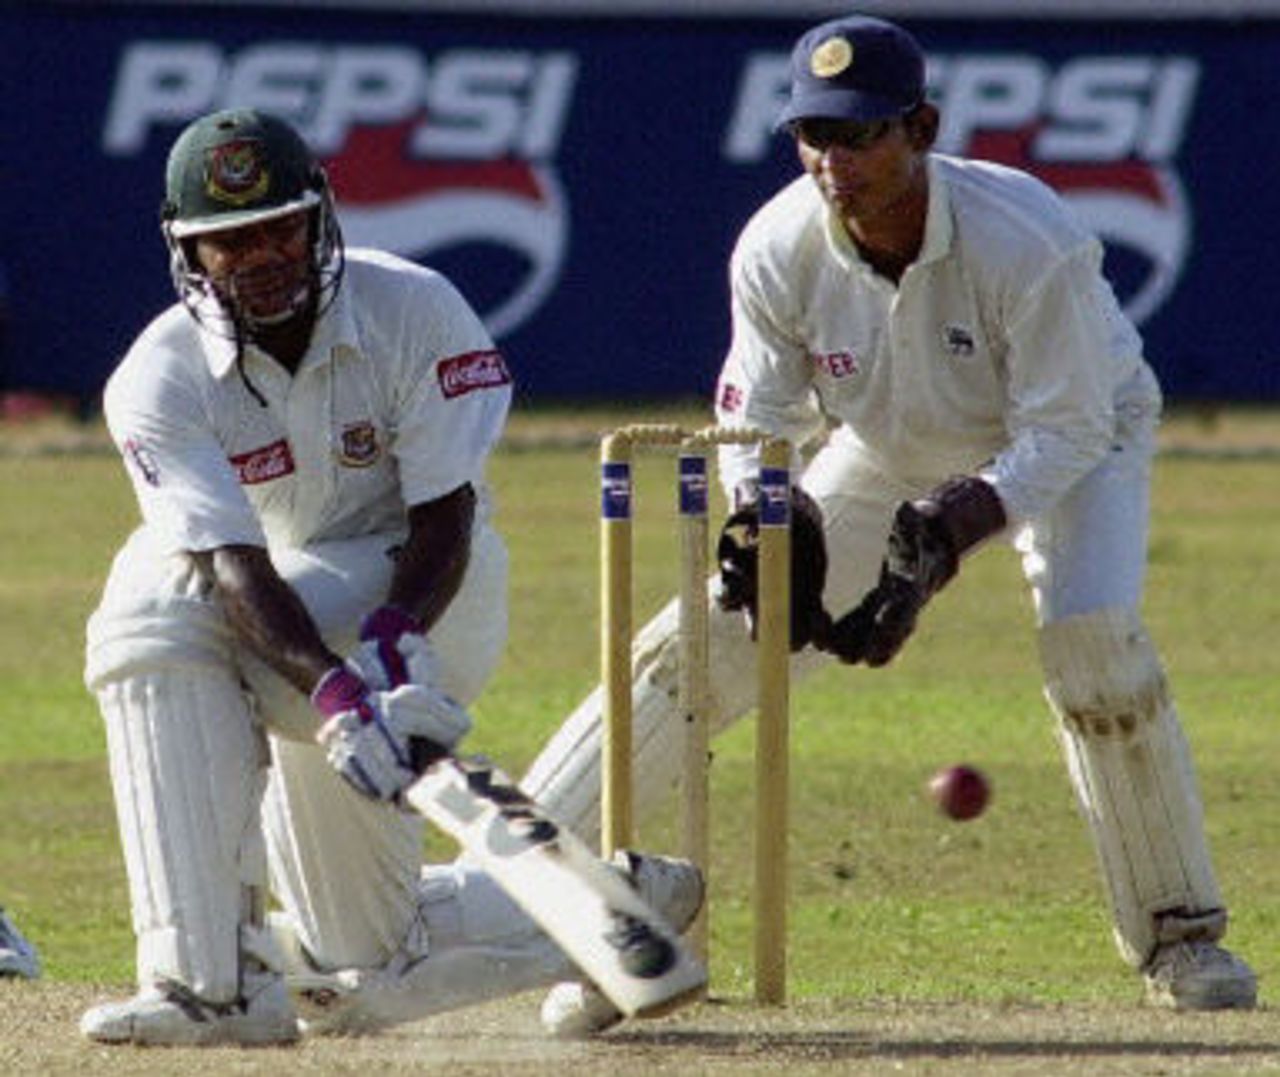 Bangladeshi batsman Aminul Islam sweeps a ball as Sangakkara looks on, Bangladeshi batsman Aminul Islam sweeps a ball as Sangakkara looks on